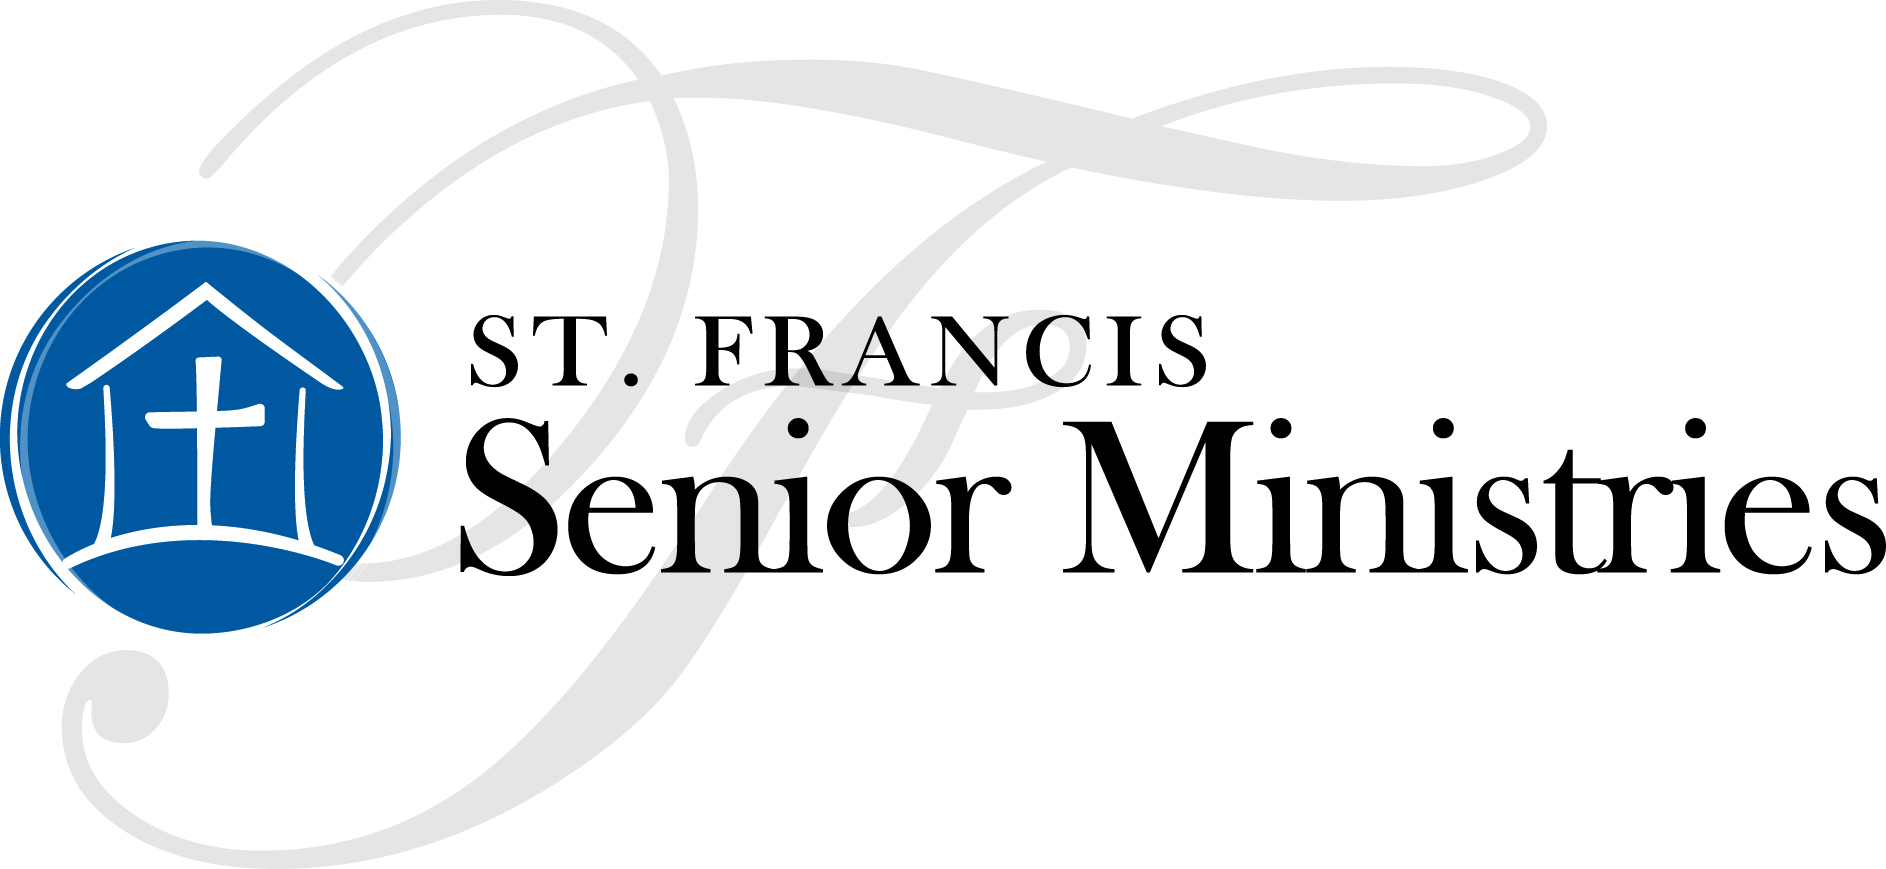 St. Francis Senior Ministries